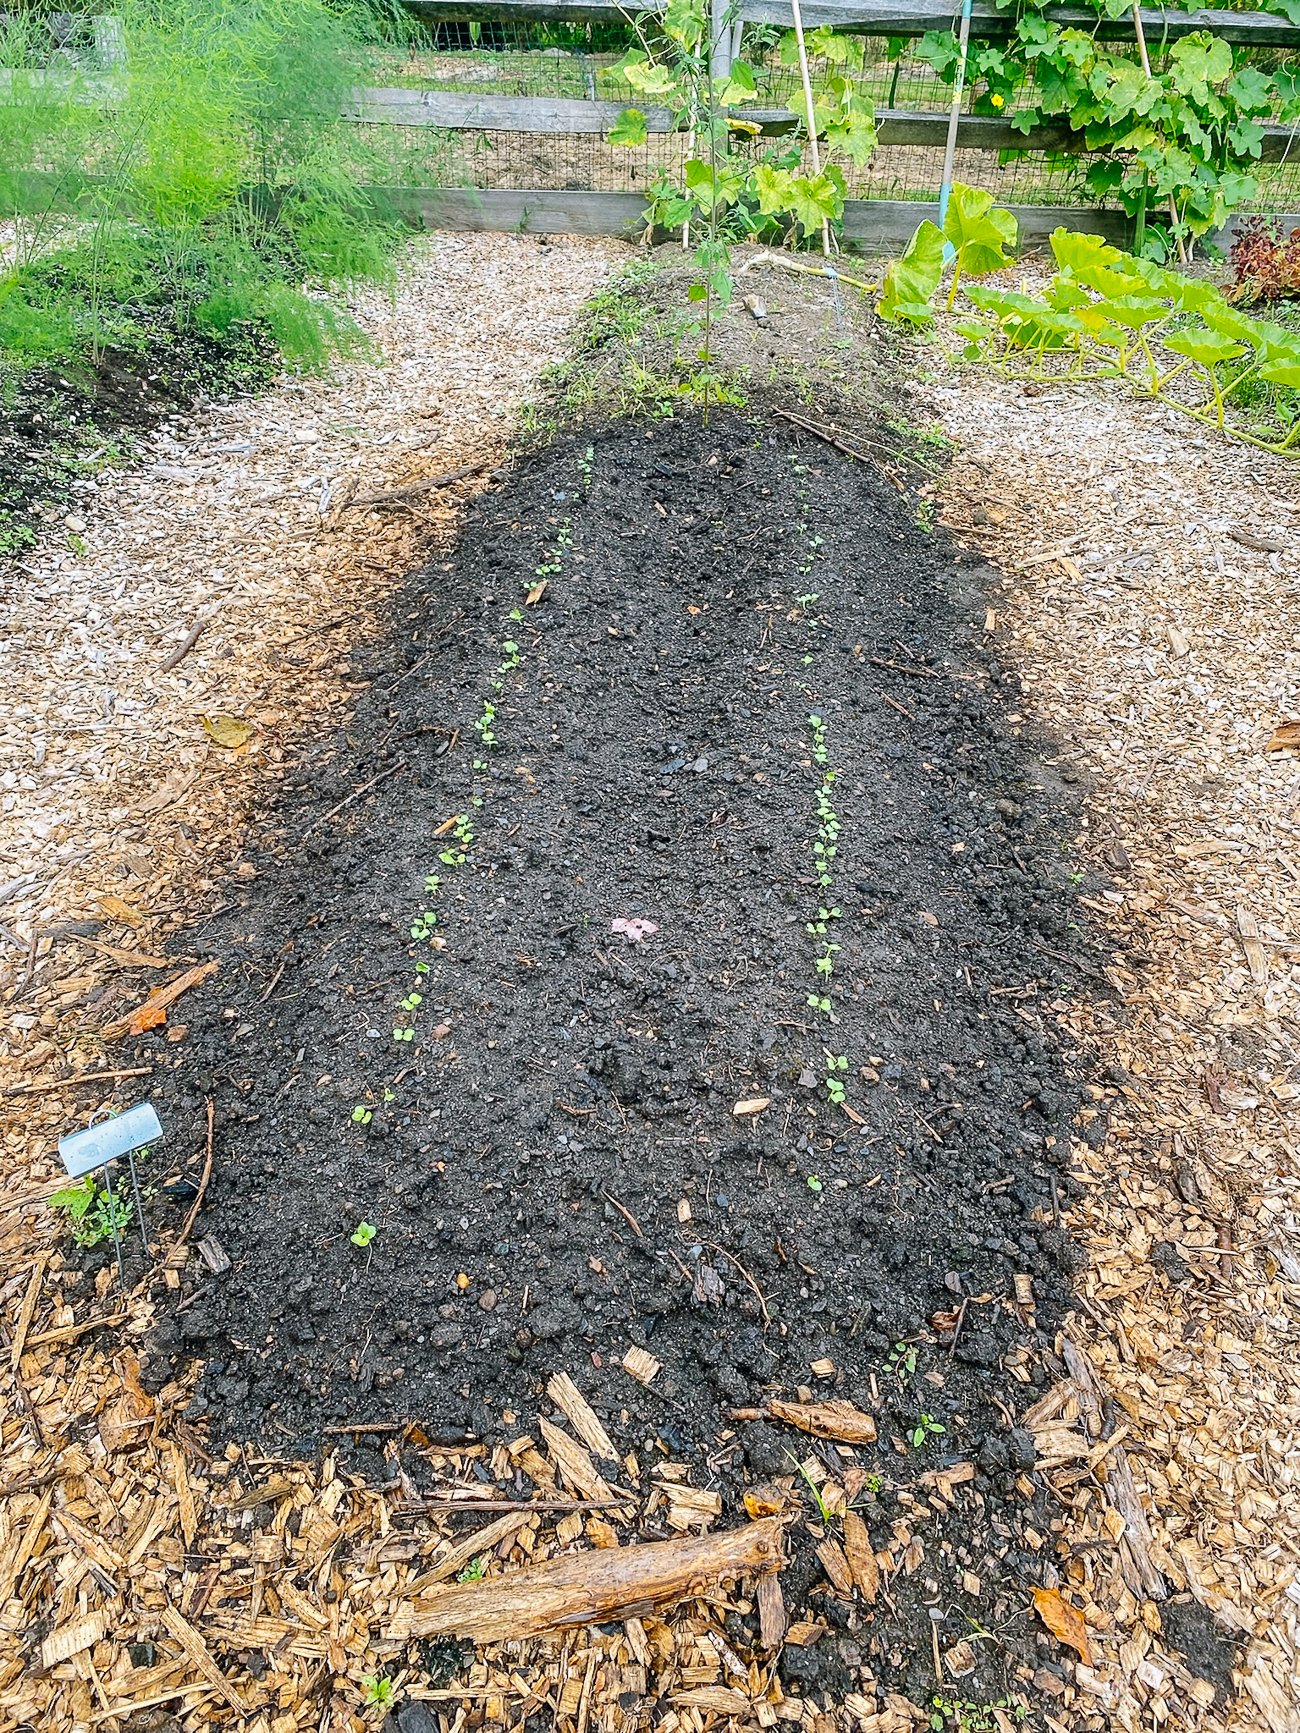 Daikon radish seedlings in garden bed